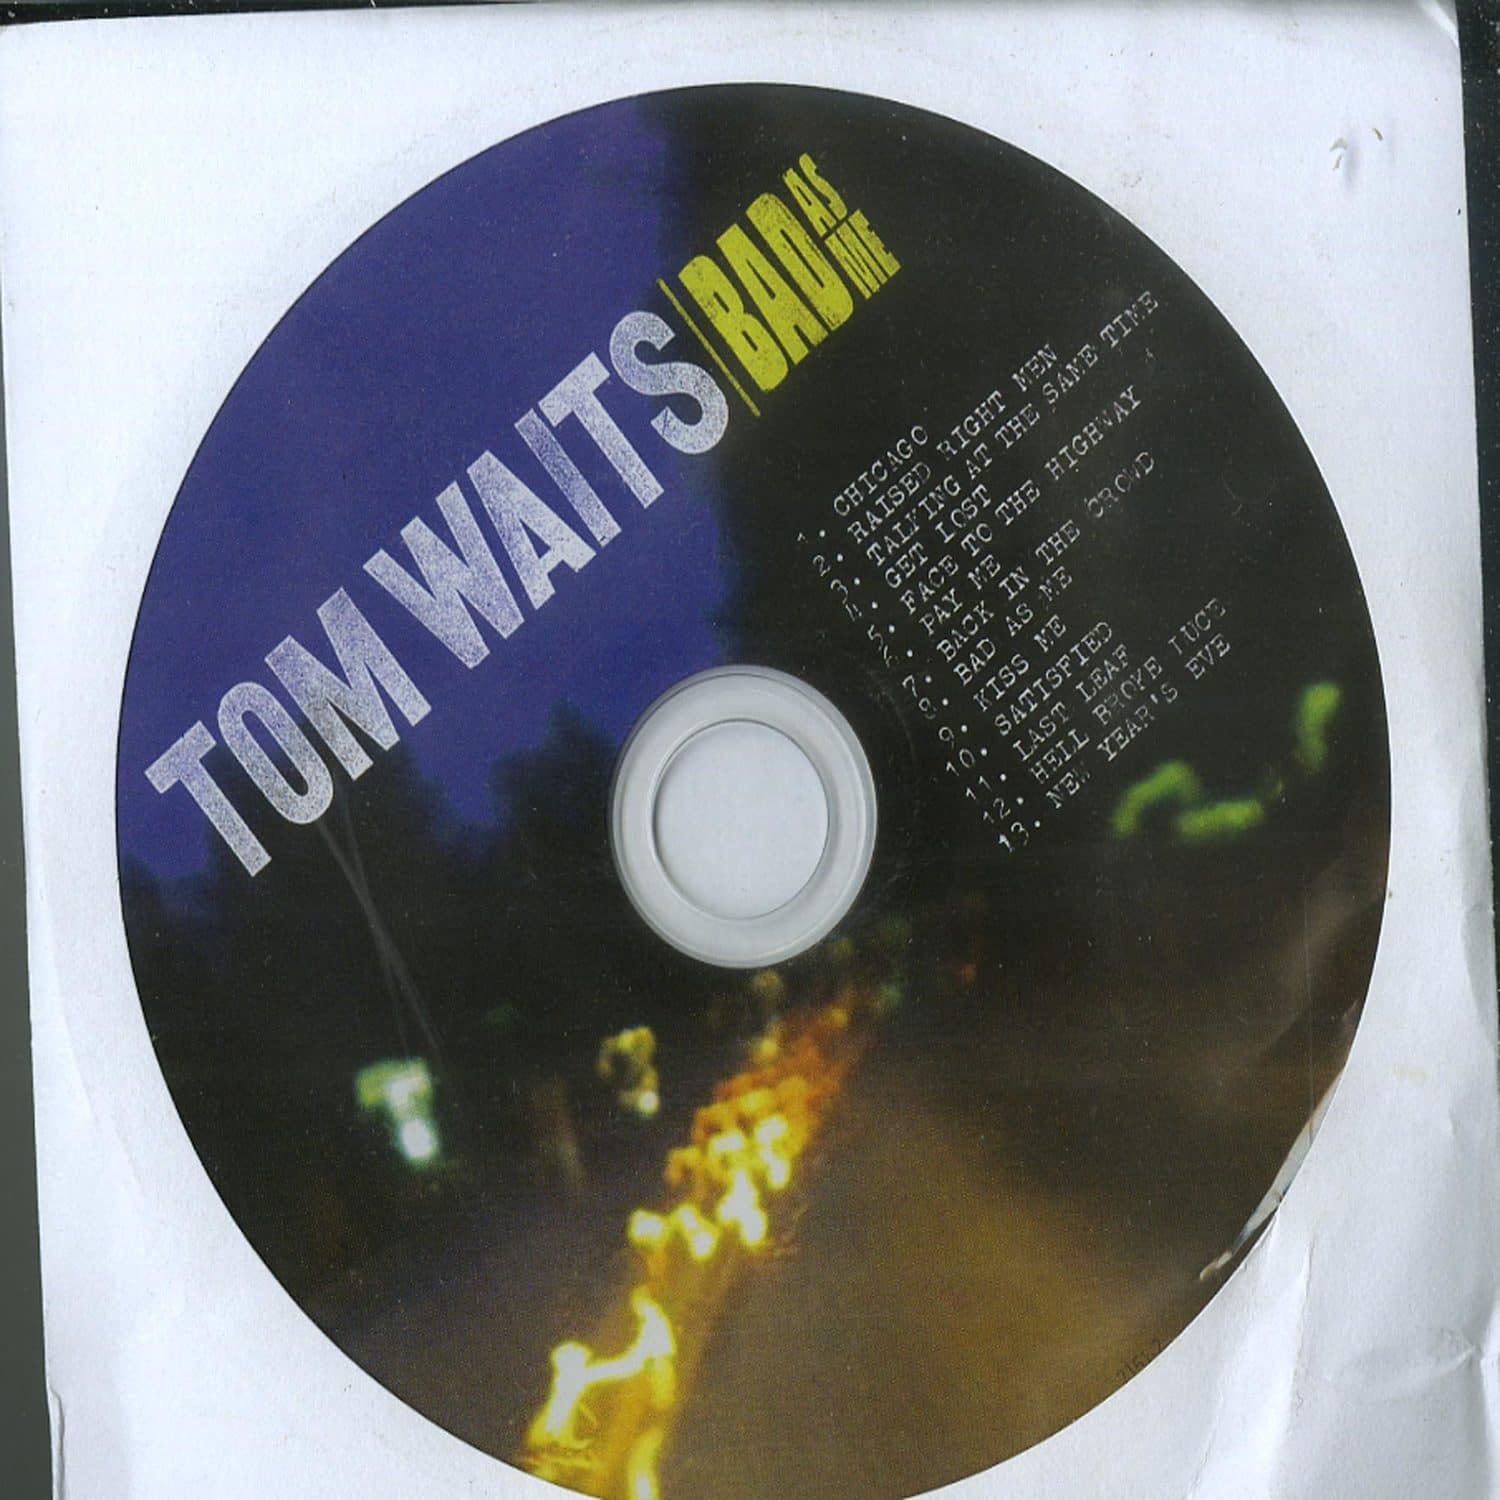 Tom Waits - BAD AS ME 